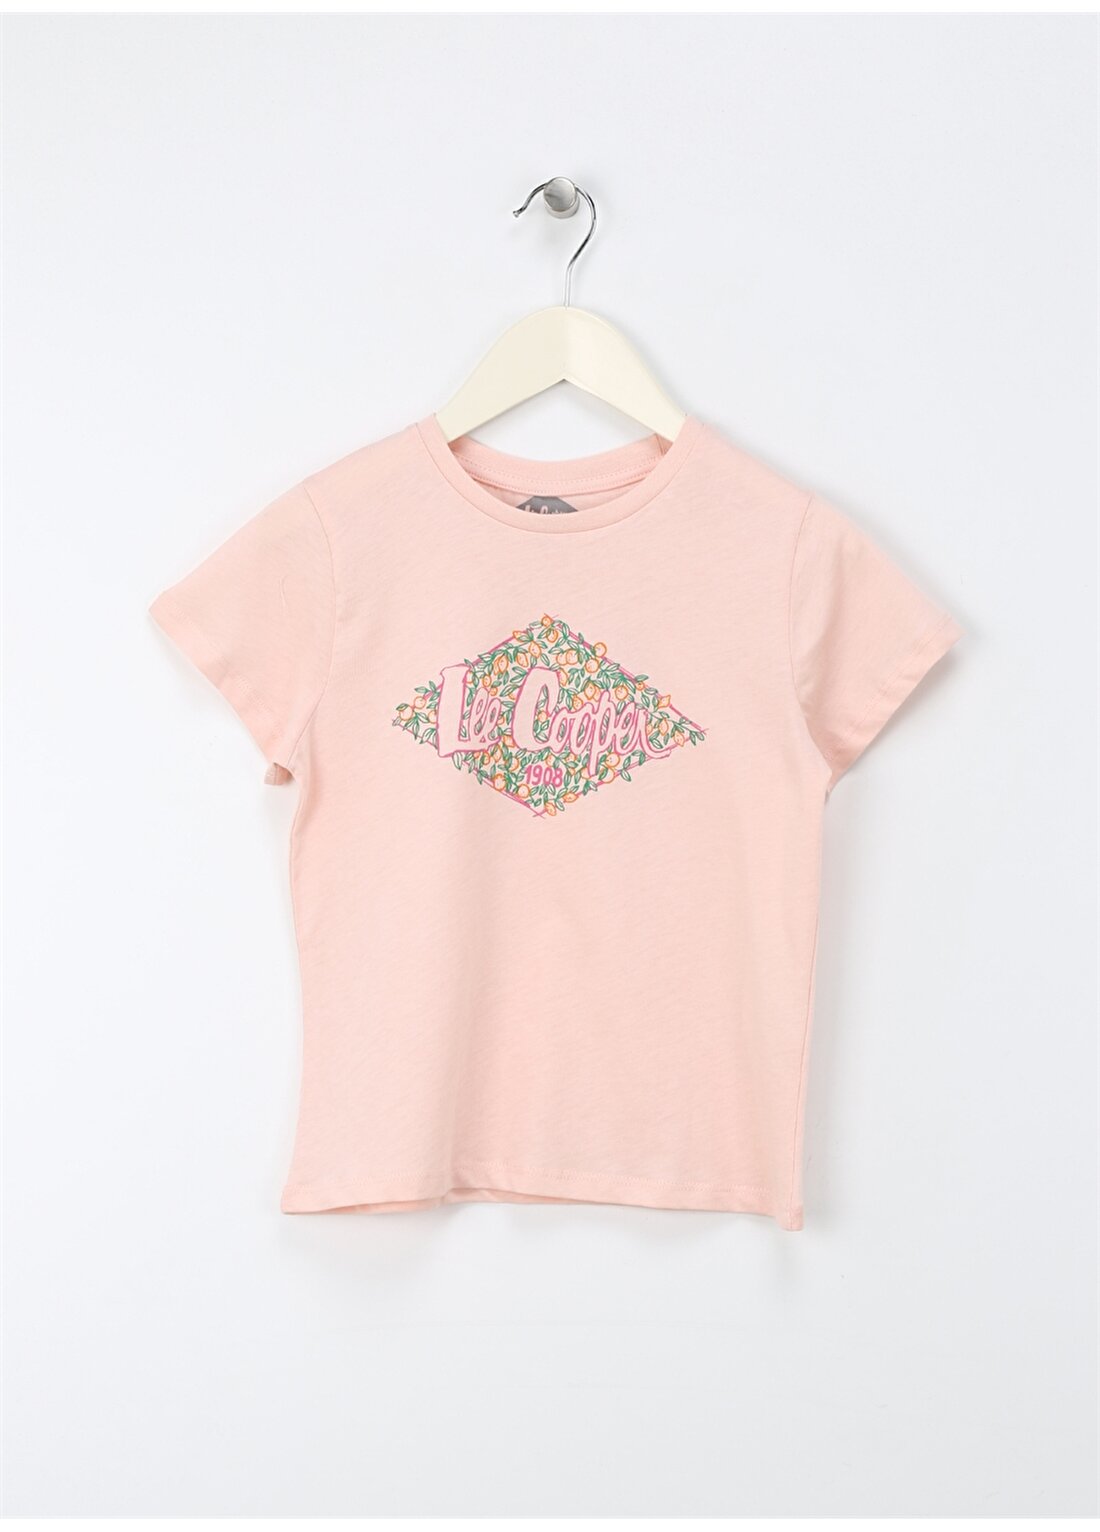 Lee Cooper Baskılı Pudra Kız Çocuk T-Shirt 242 LCG 242003 FLOWERS PUDRA